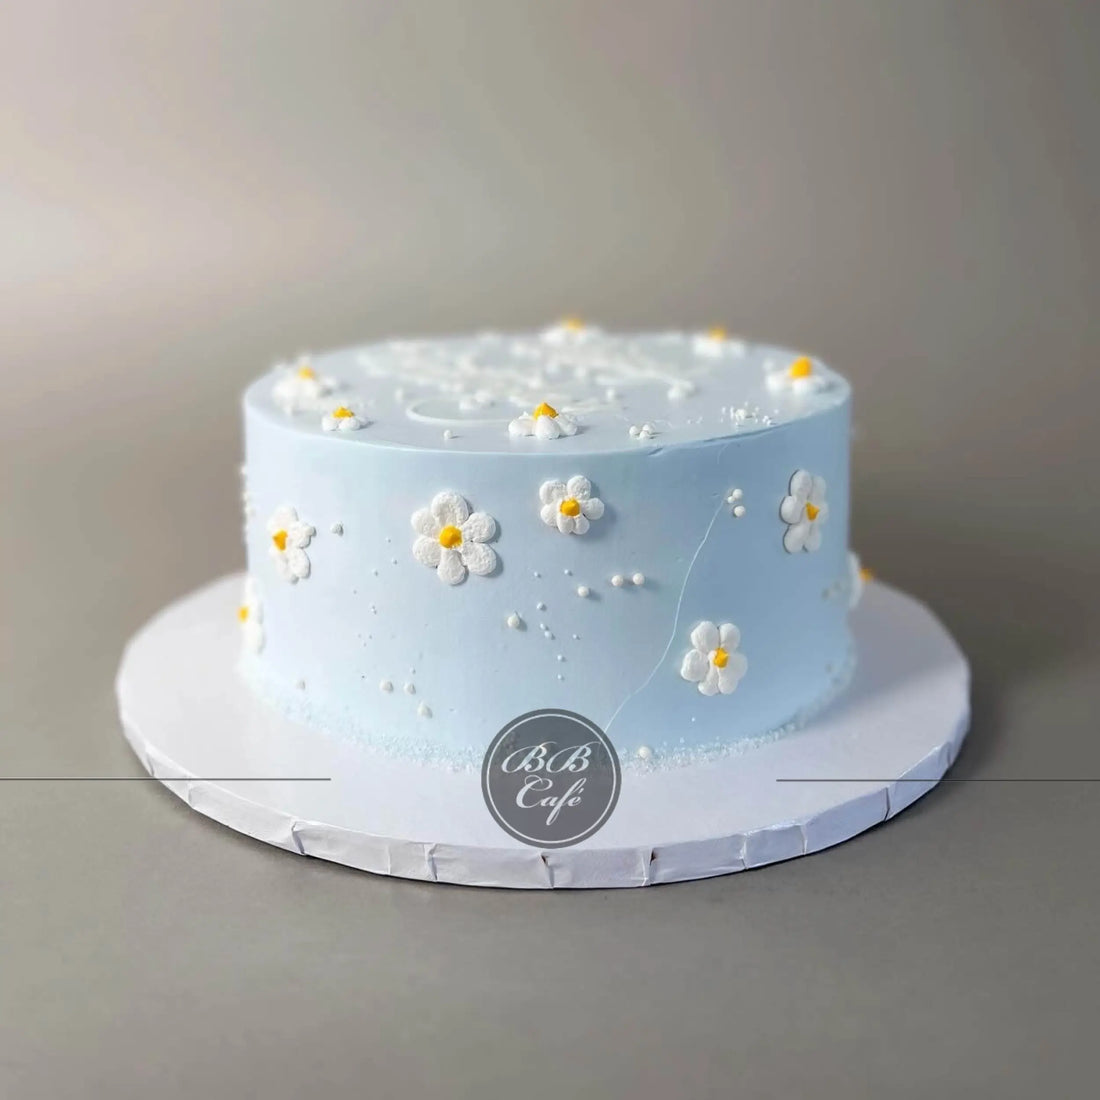 Hand piped daisies on whipped cream - custom cake